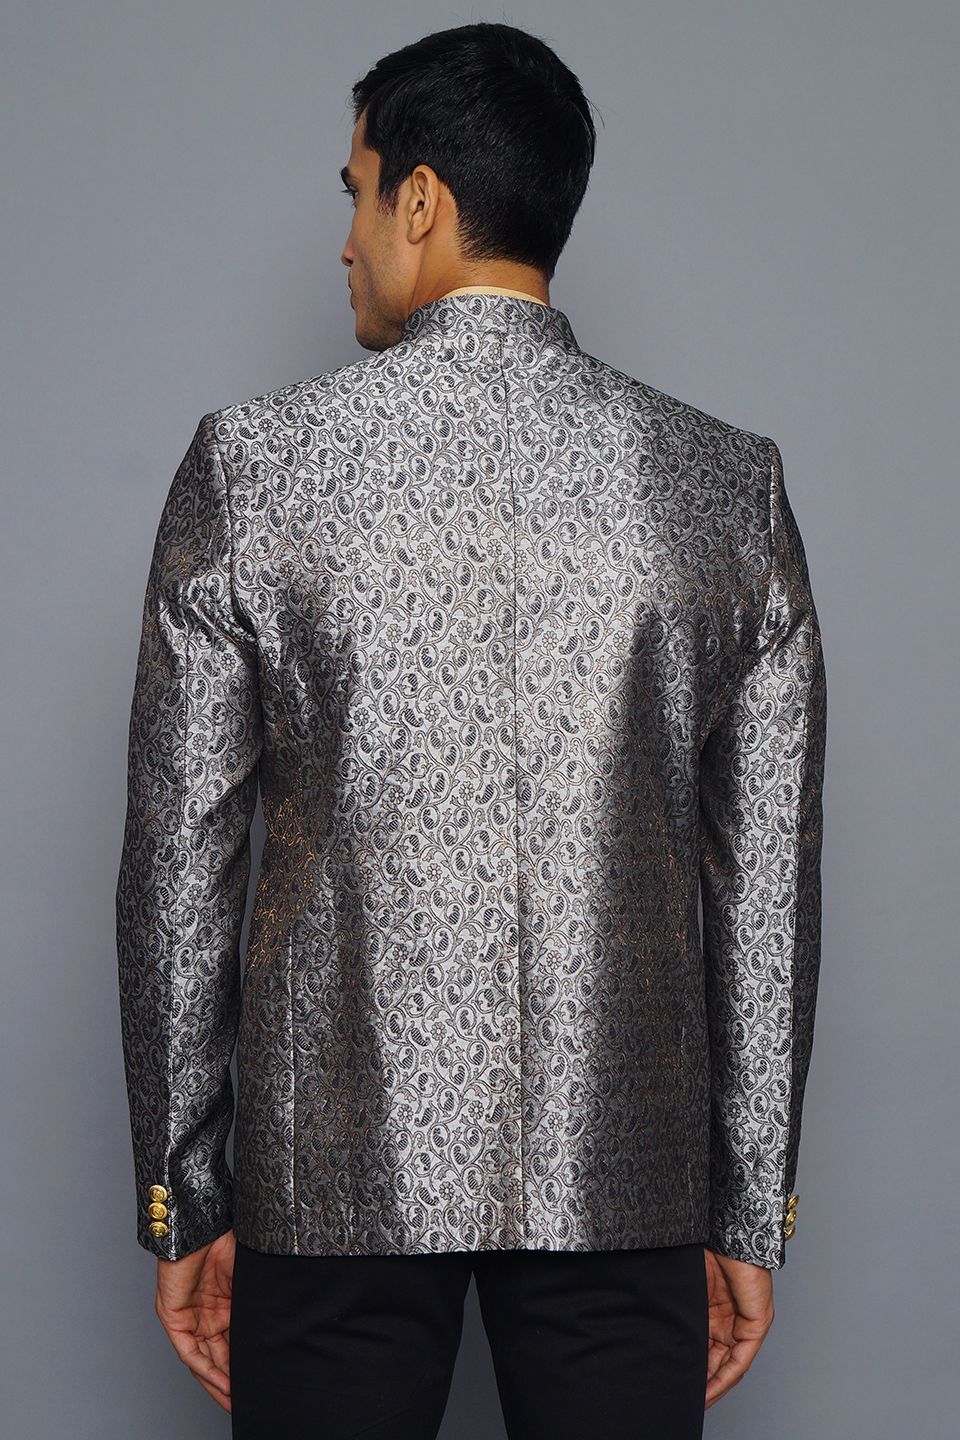 Wintage Men's Banarsi Rayon Cotton Casual and Festive Indian Jodhpuri Grandad Bandhgala Blazer : Grey